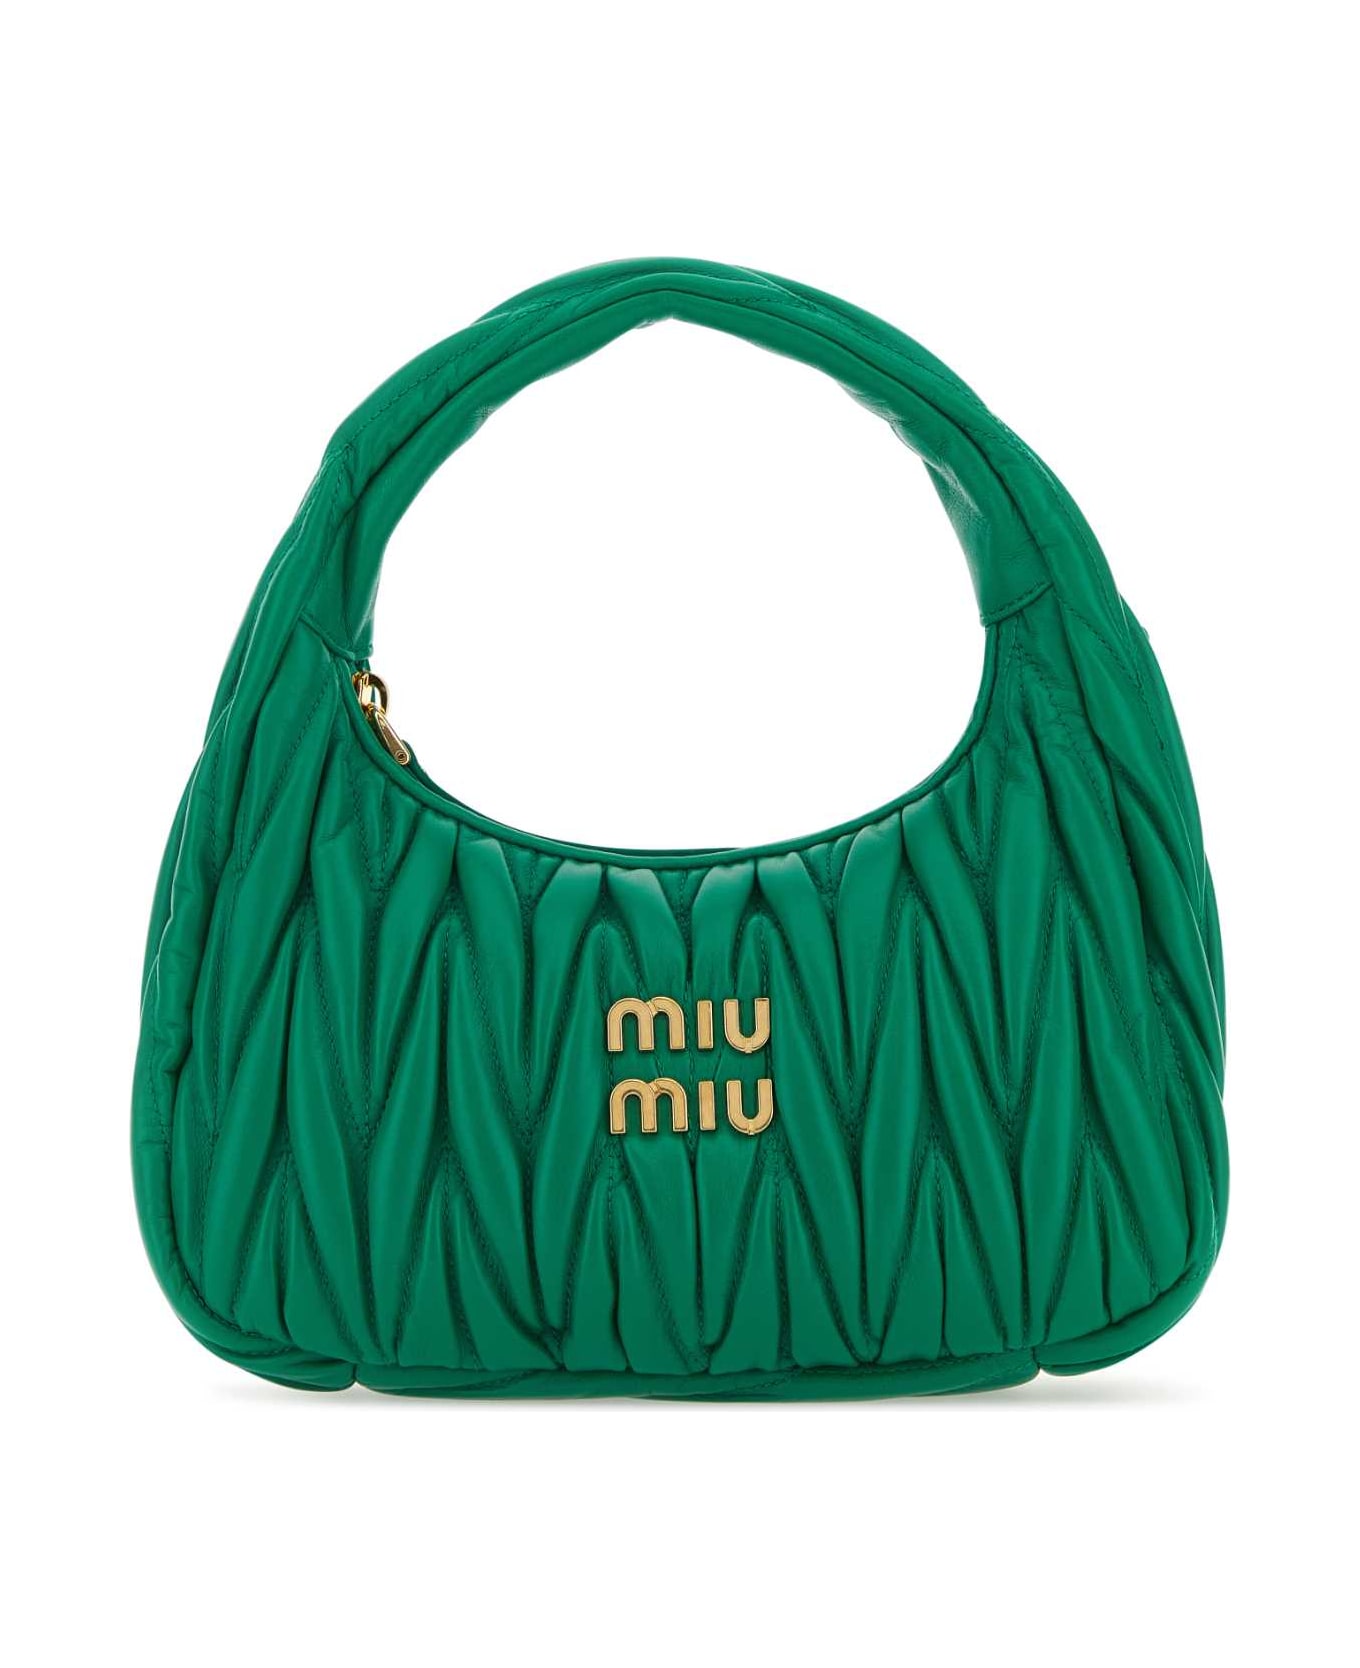 Miu Miu Grass Green Nappa Leather Handbag - MANGO